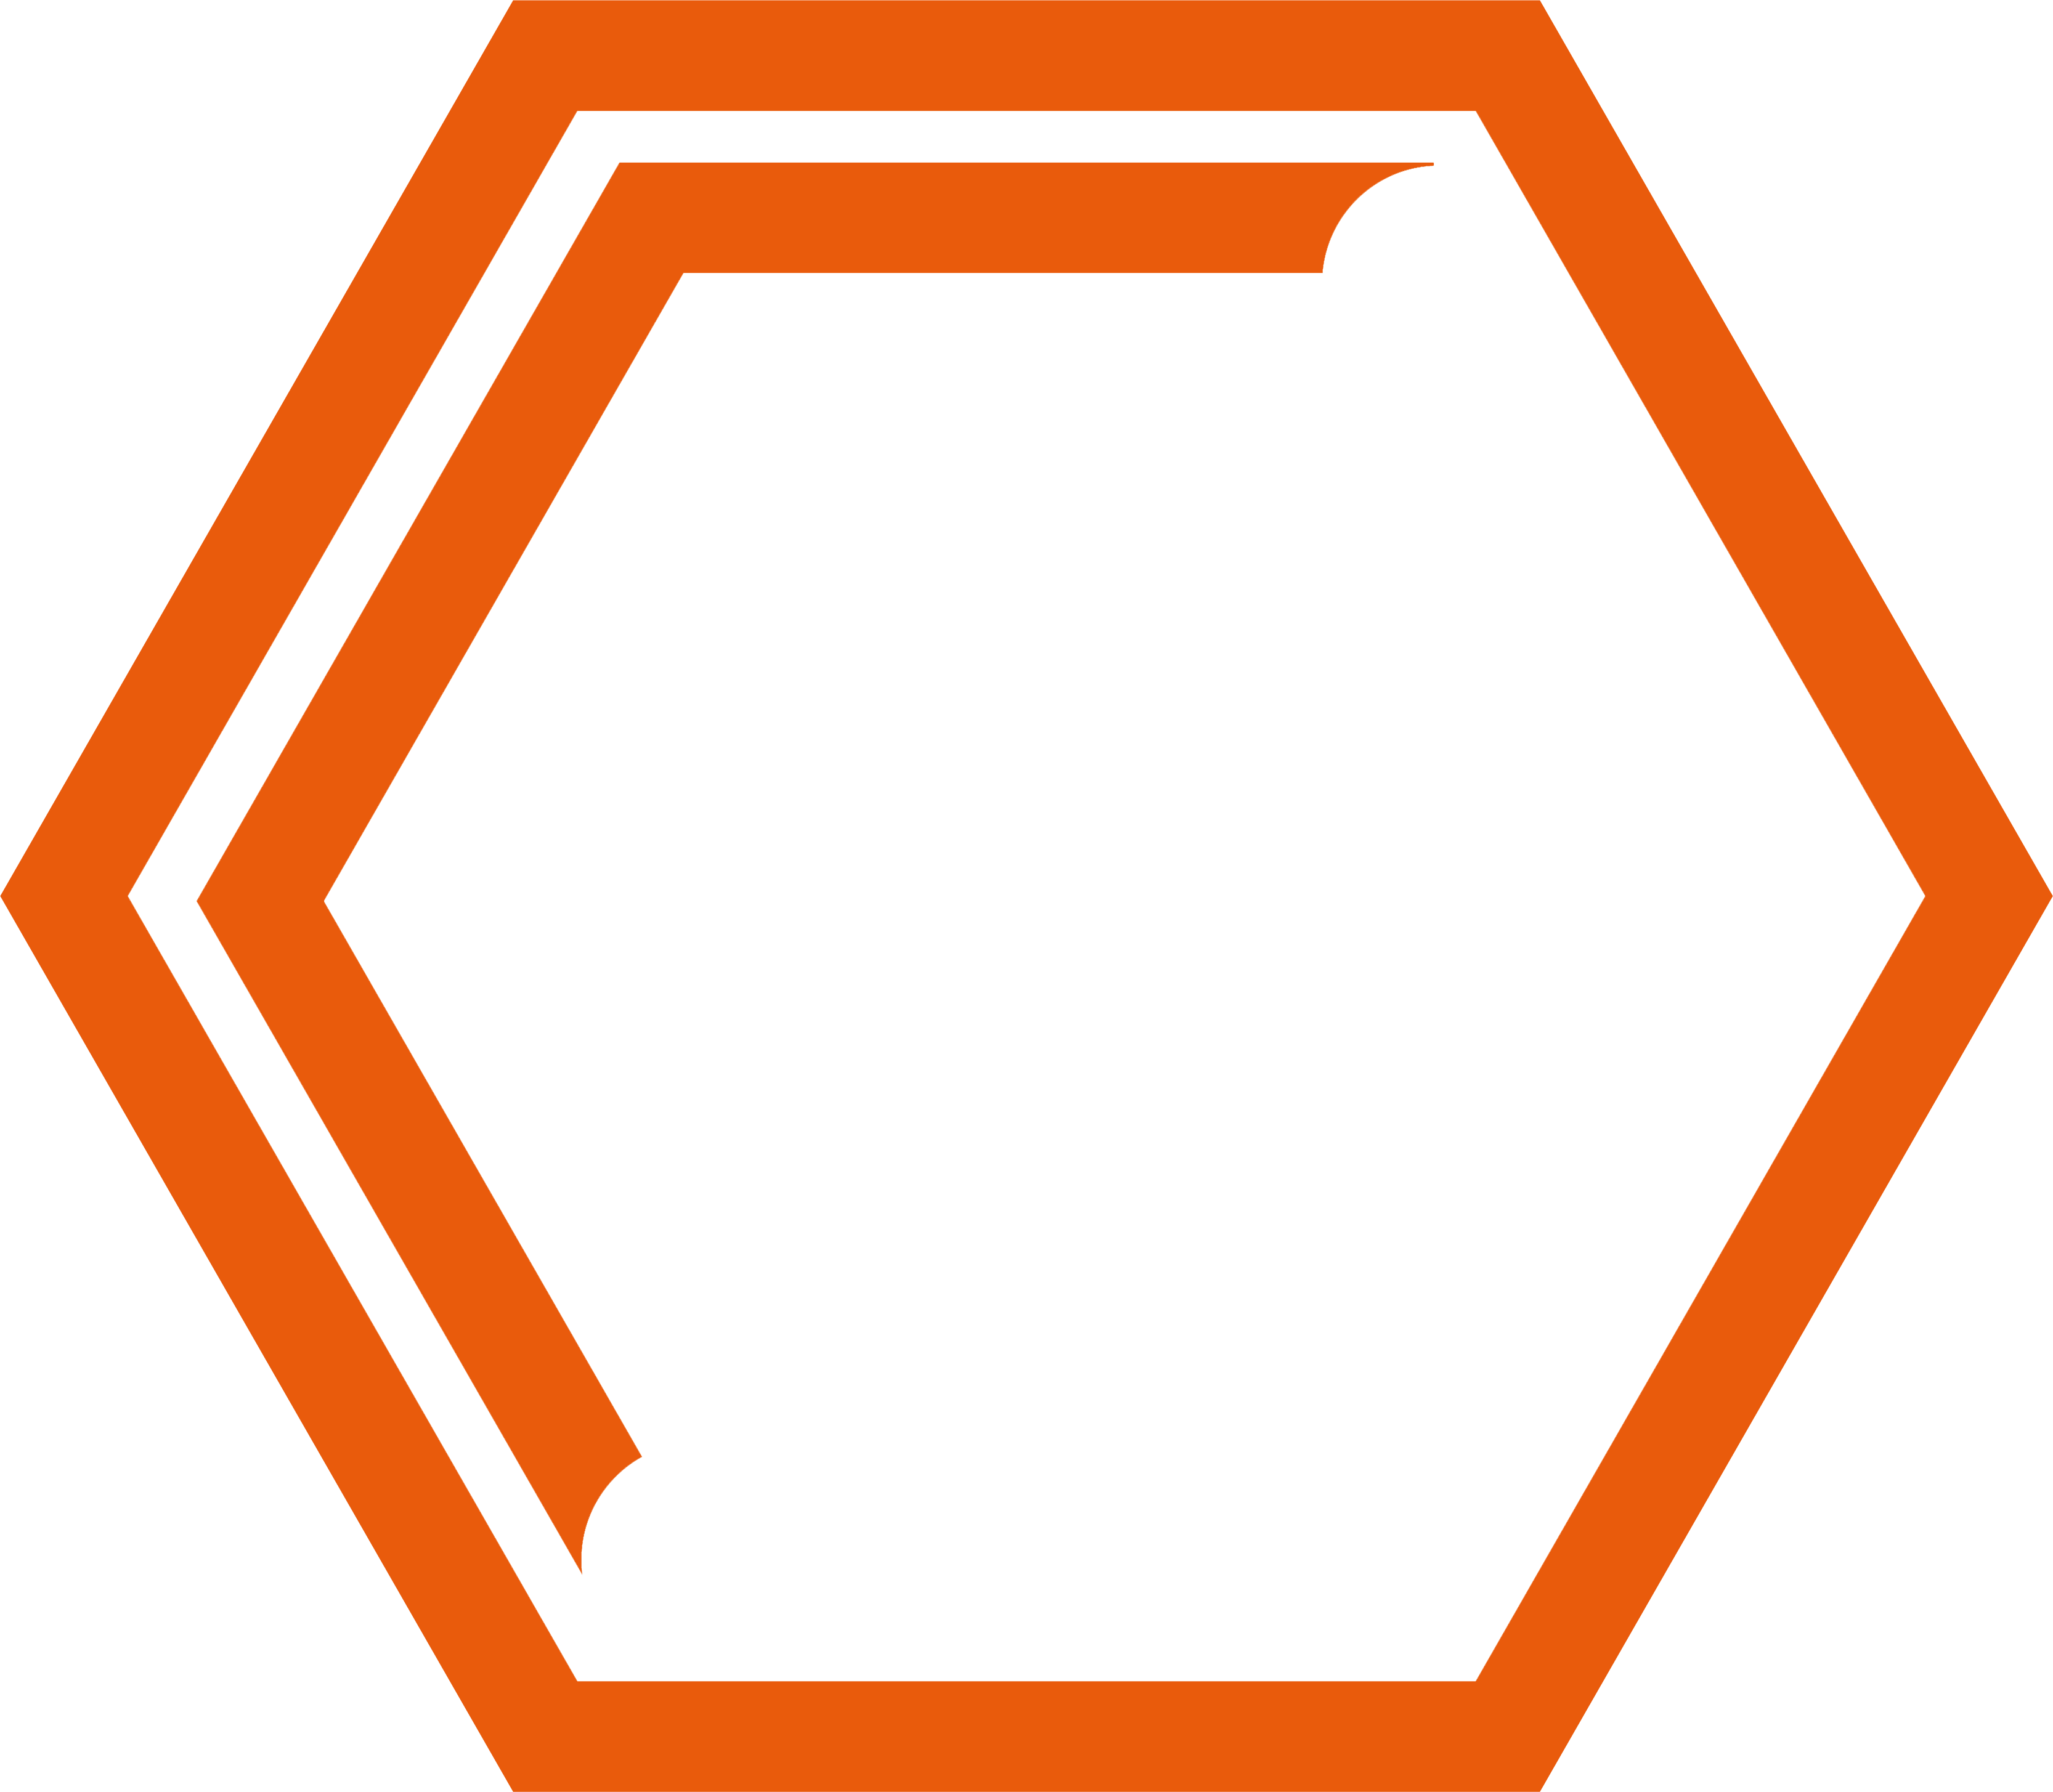 Hexagon Transparent Background